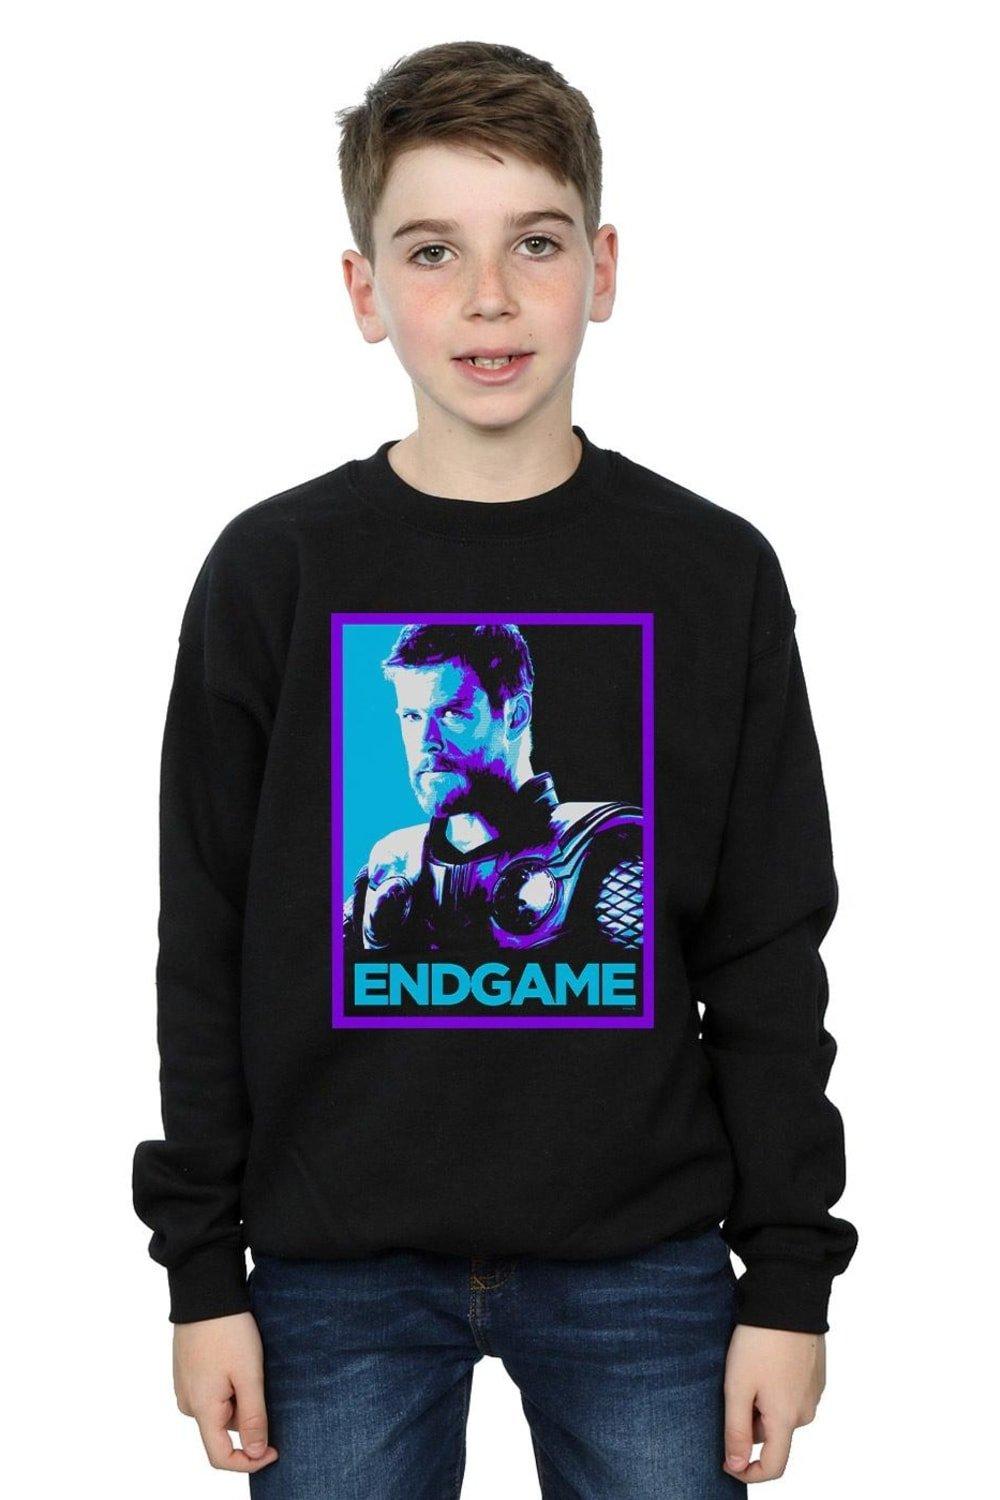 Avengers Endgame Thor Poster Sweatshirt